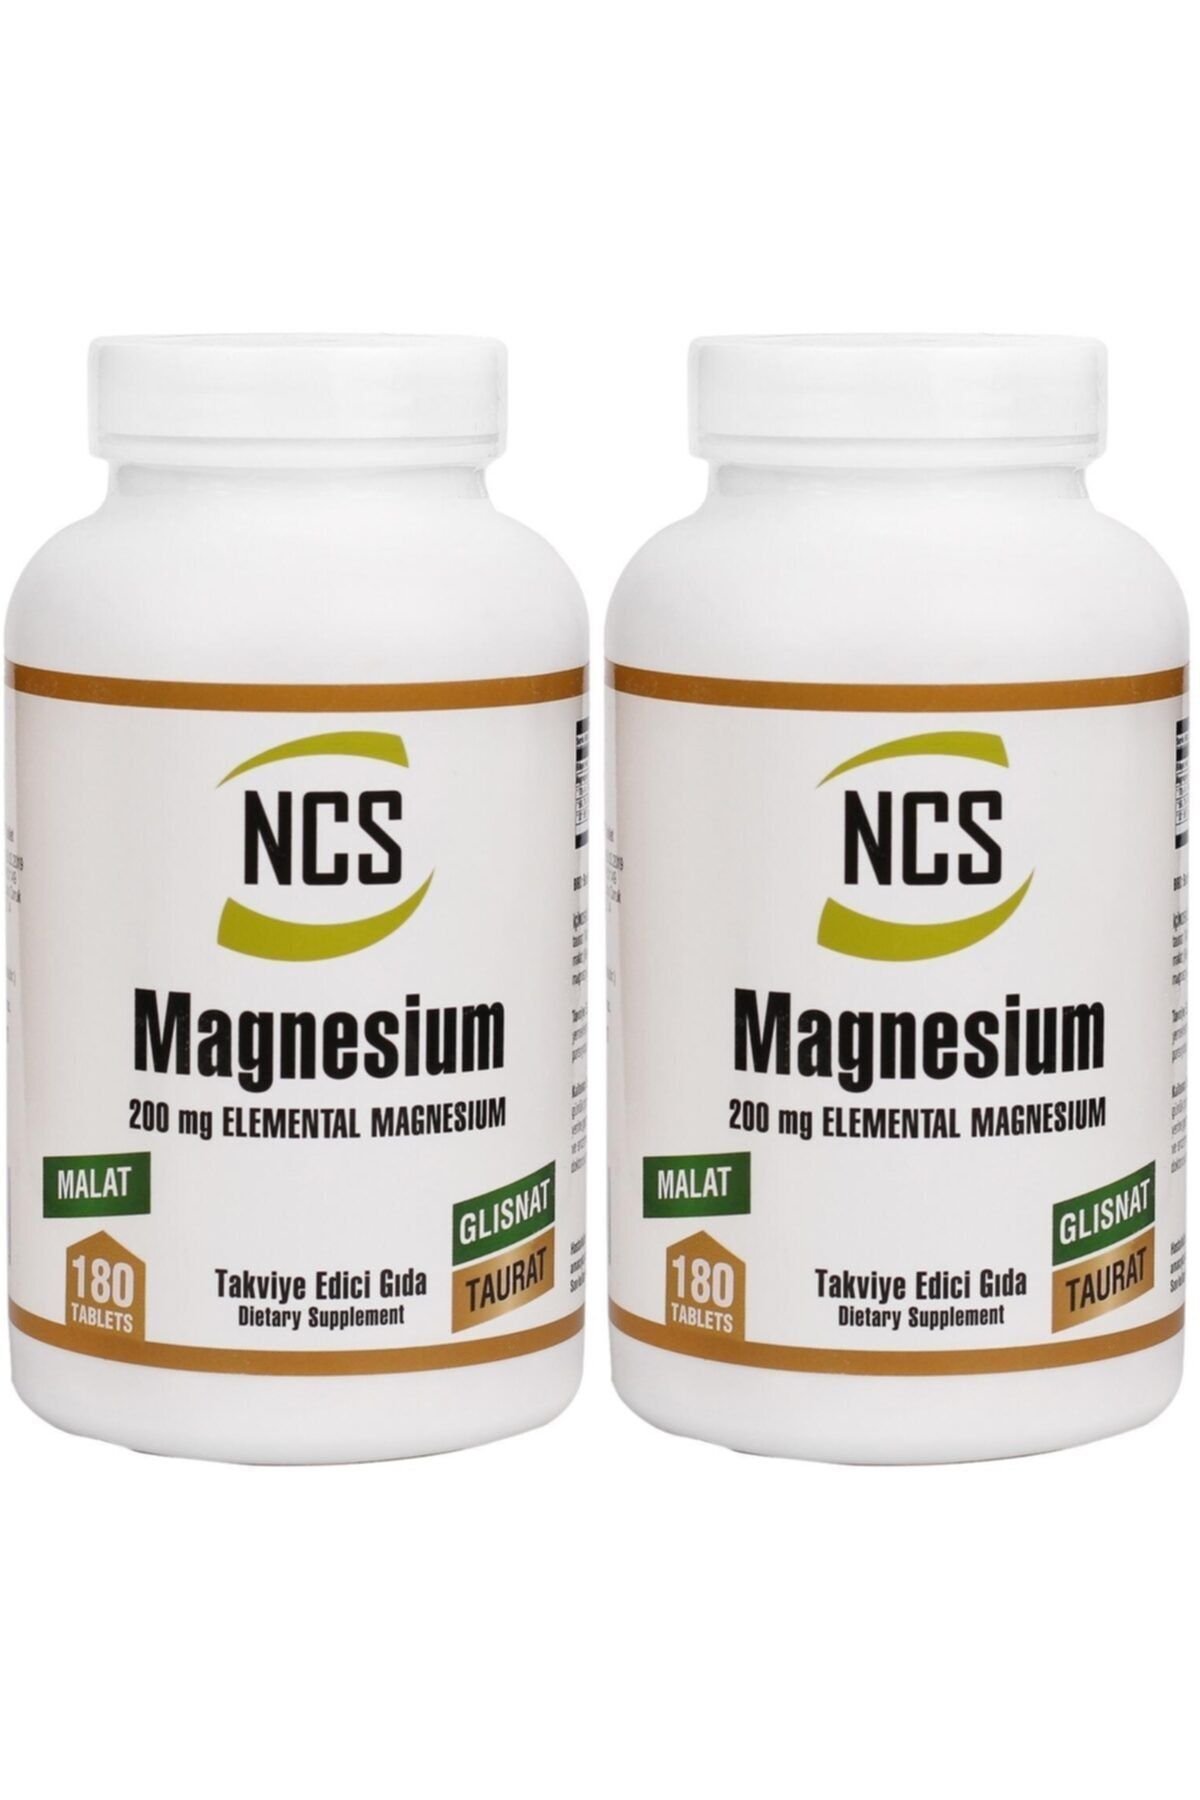 Ncs Magnezyum Bisglisinat 2 Kutu 360 Tablet Taurat200 mg Magnesium